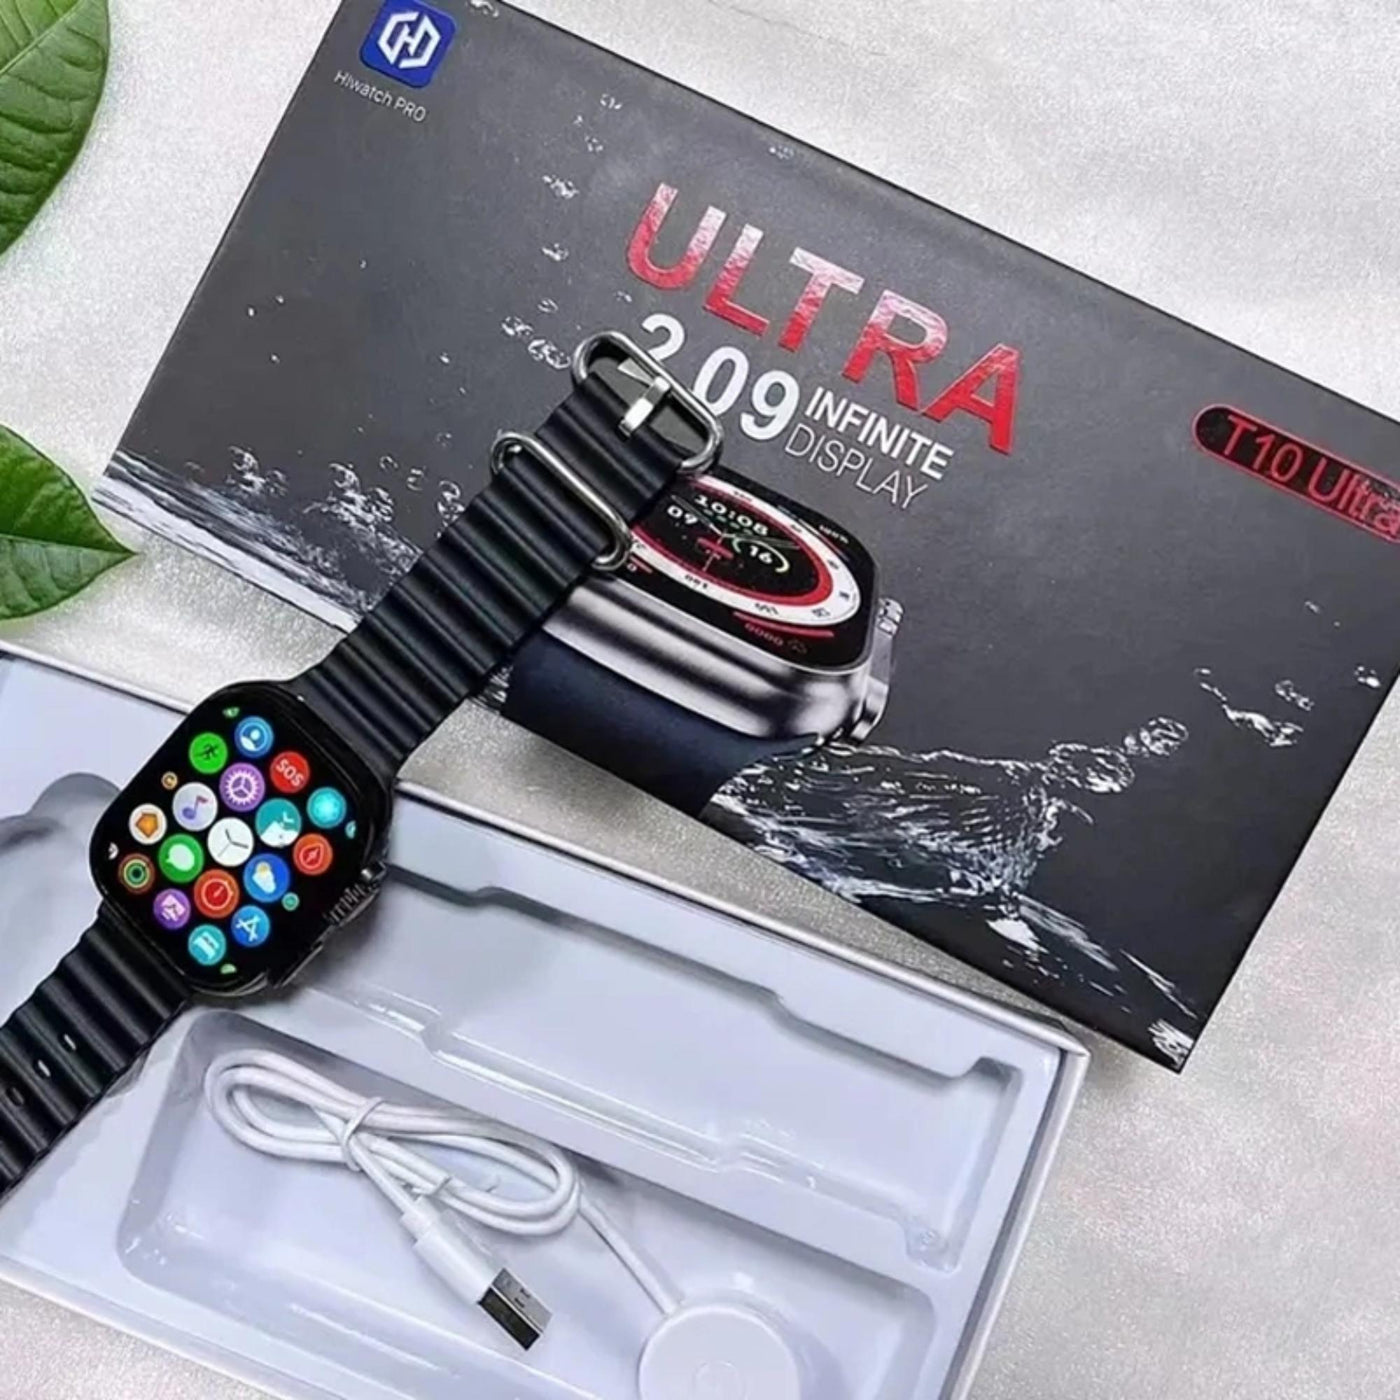 SMART WATCH  Ultra 2.09 Infinite Display Smartwatch